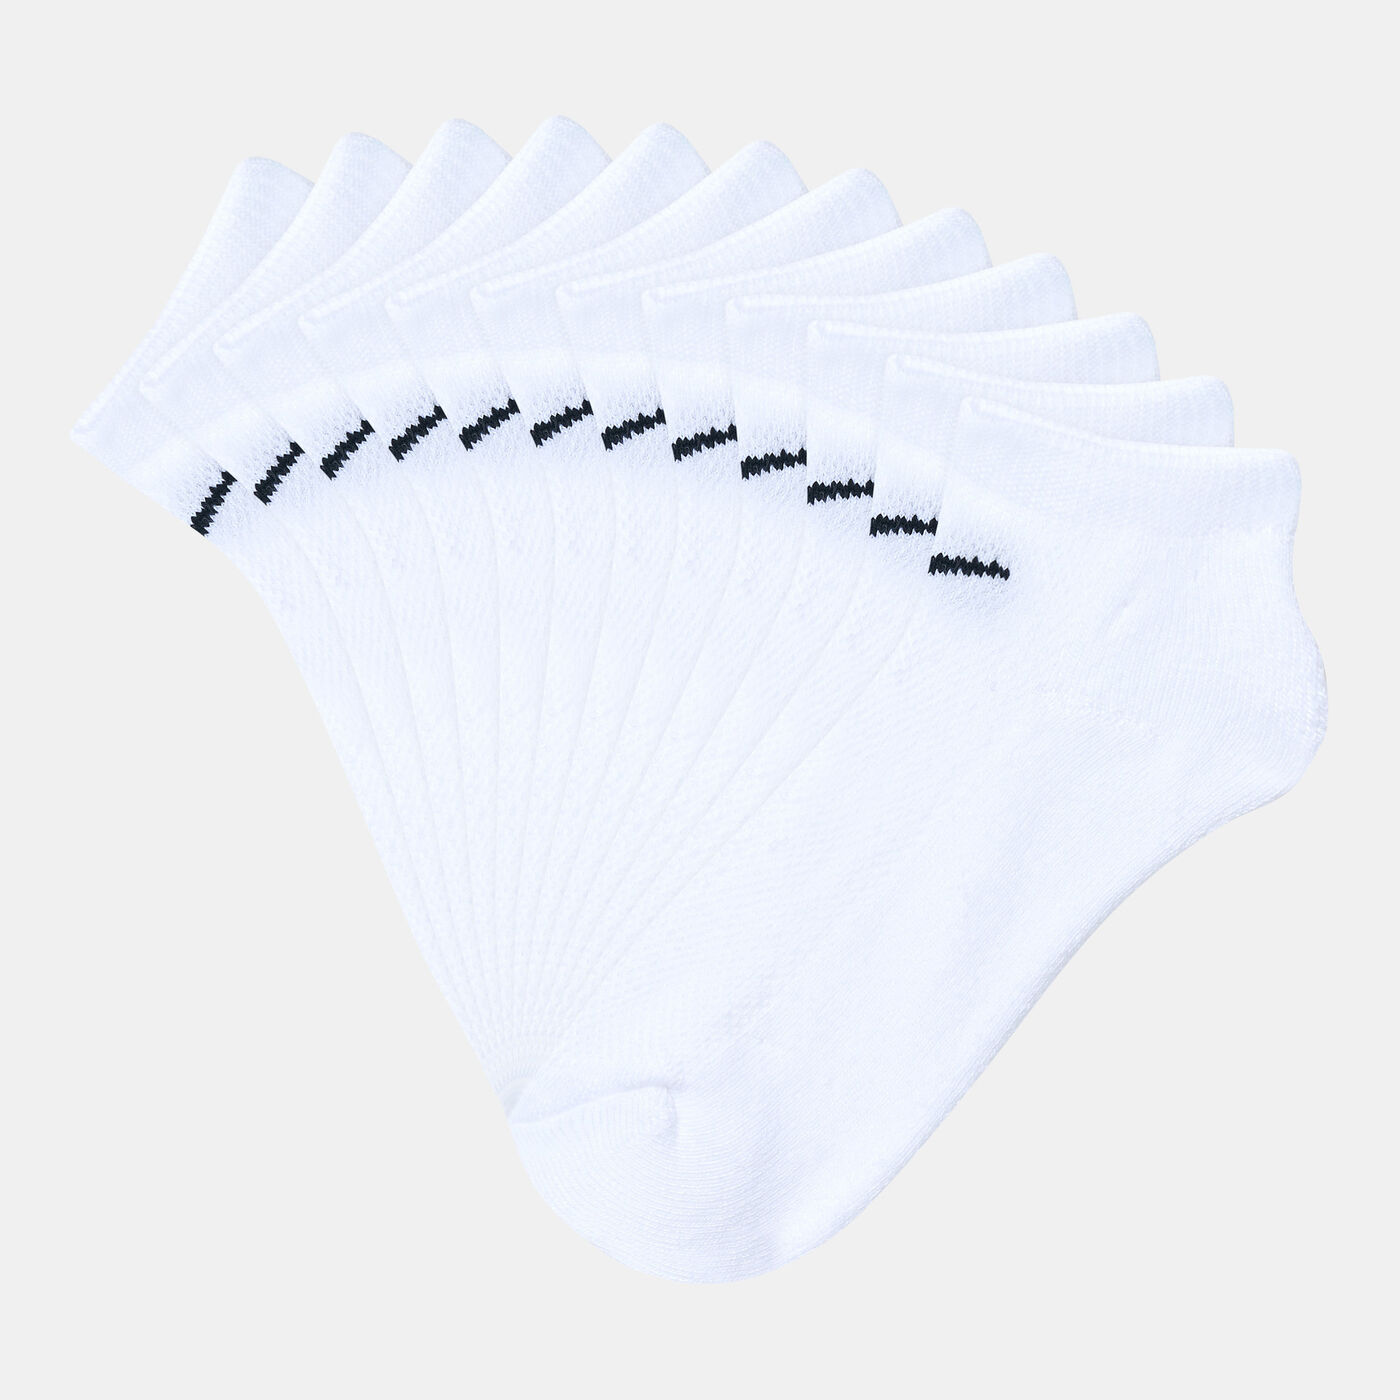 Cushioned No-Show Socks (6 Pairs)